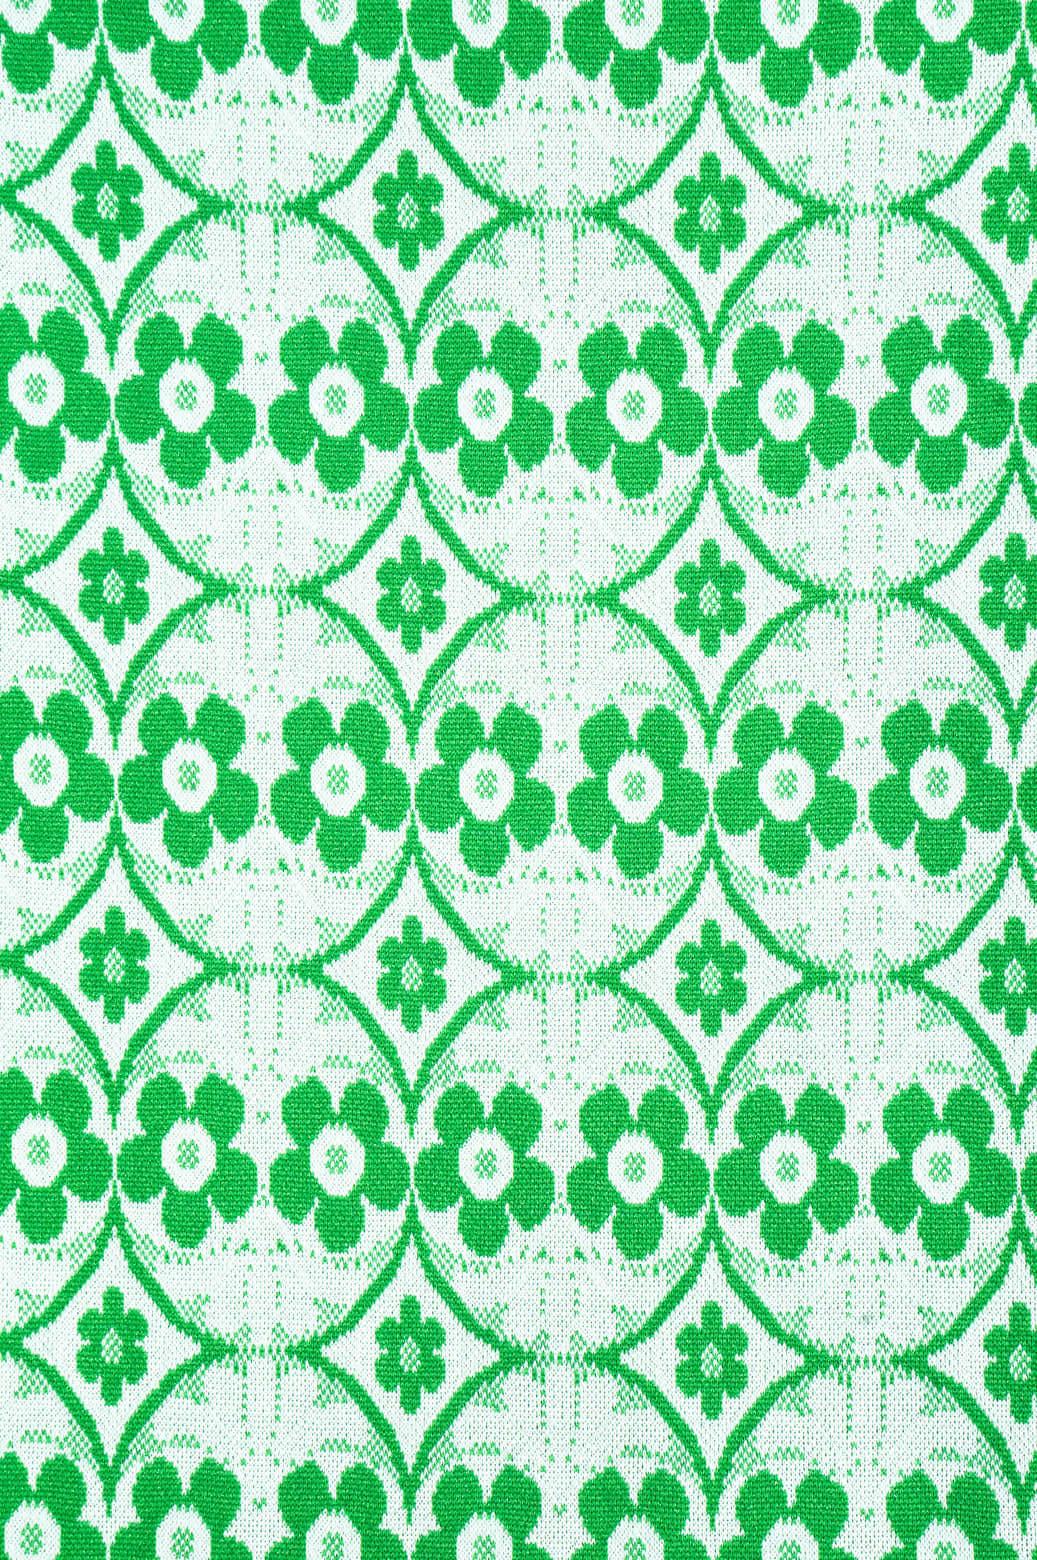 US Vintage Flower Print Jersey Fabric/アメリカ ヴィンテージ フラワープリント ファブリック ジャージー素材 レトロ 生地